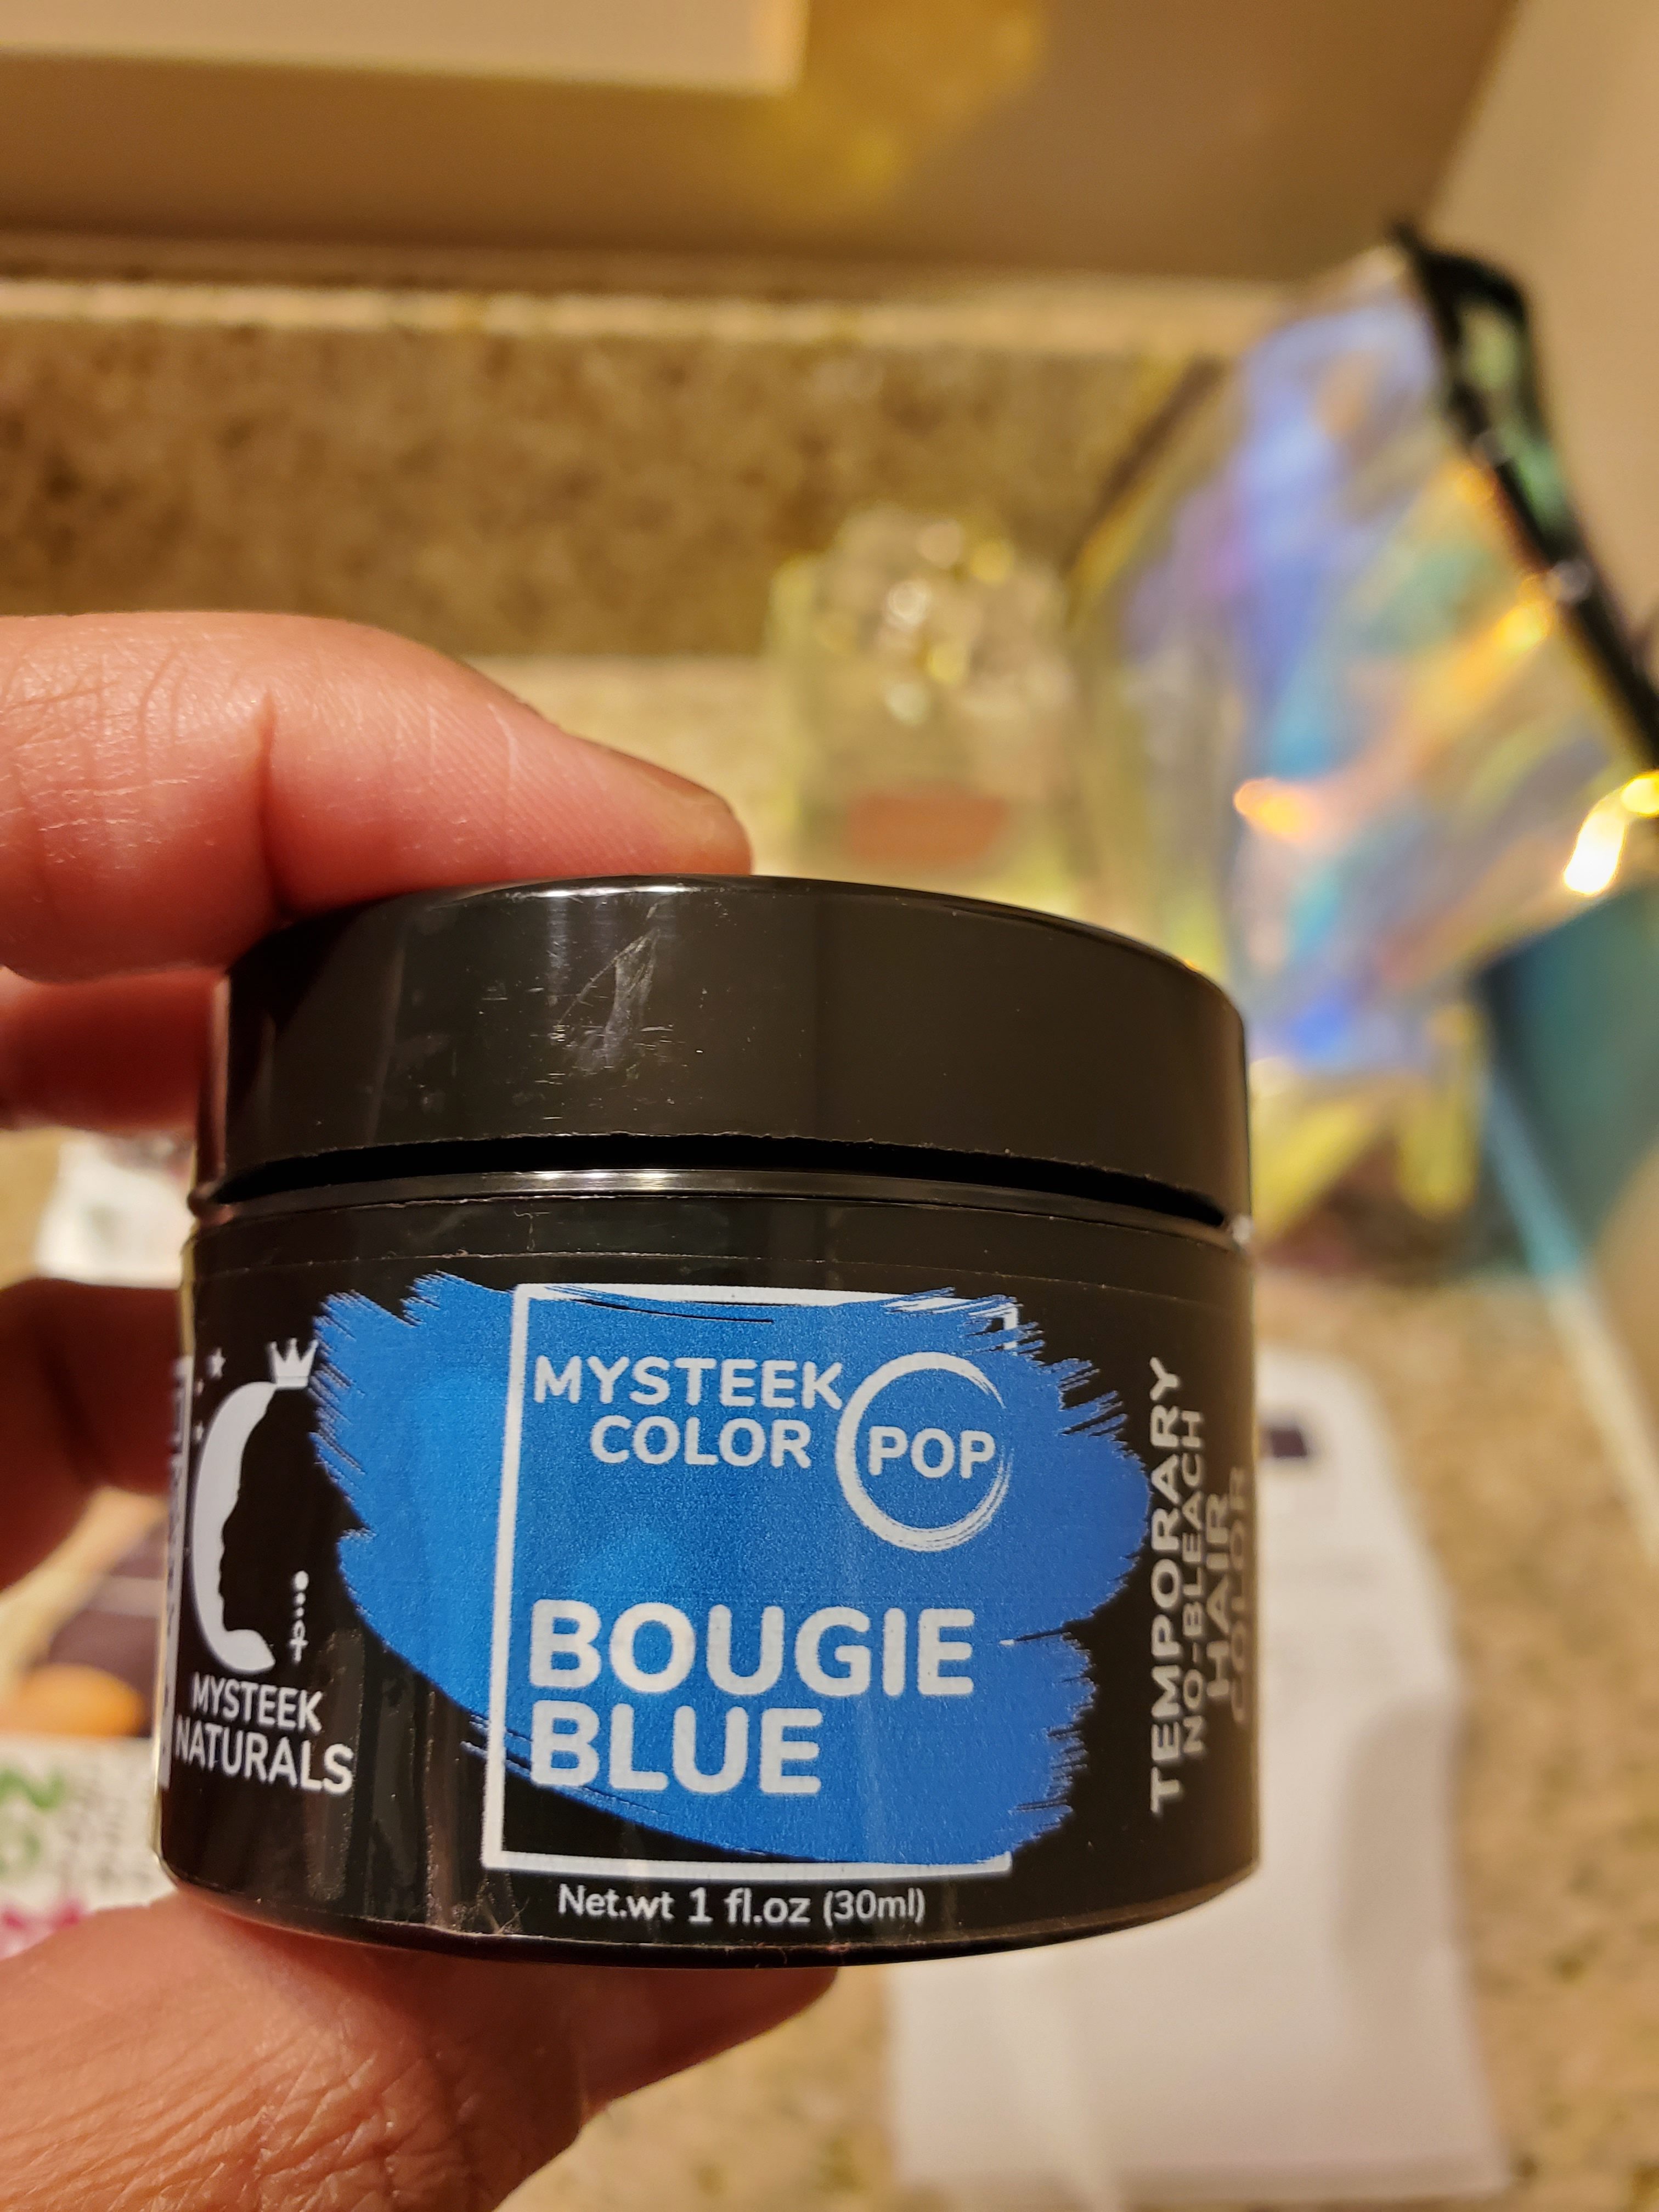 Bougie Blue by Mysteek Naturals